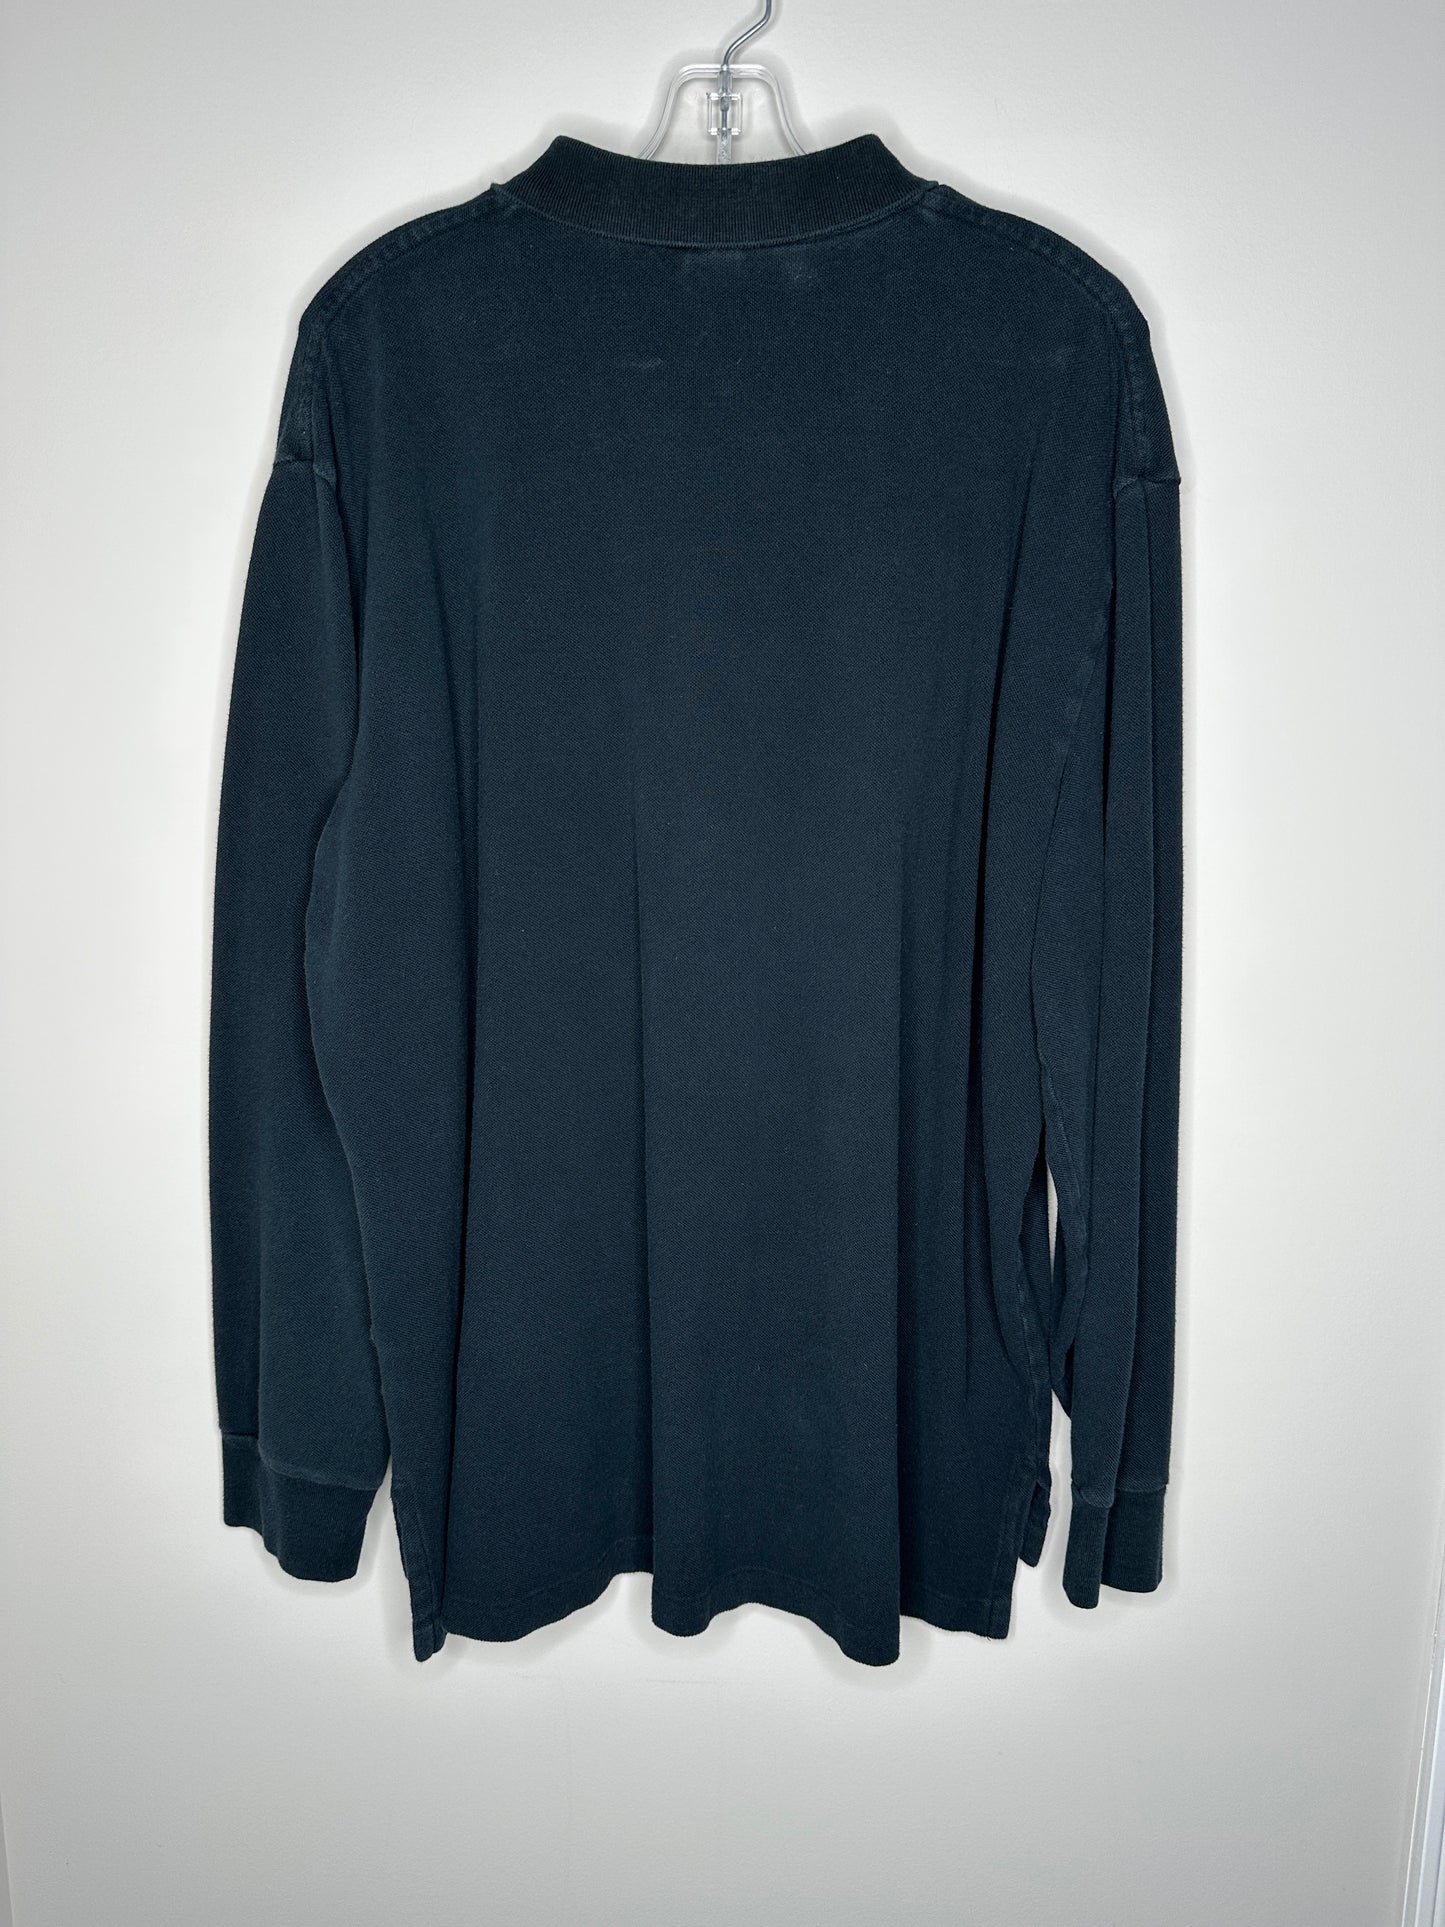 Polo by Ralph Lauren Men's Size XL Black Long Sleeve Polo Shirt